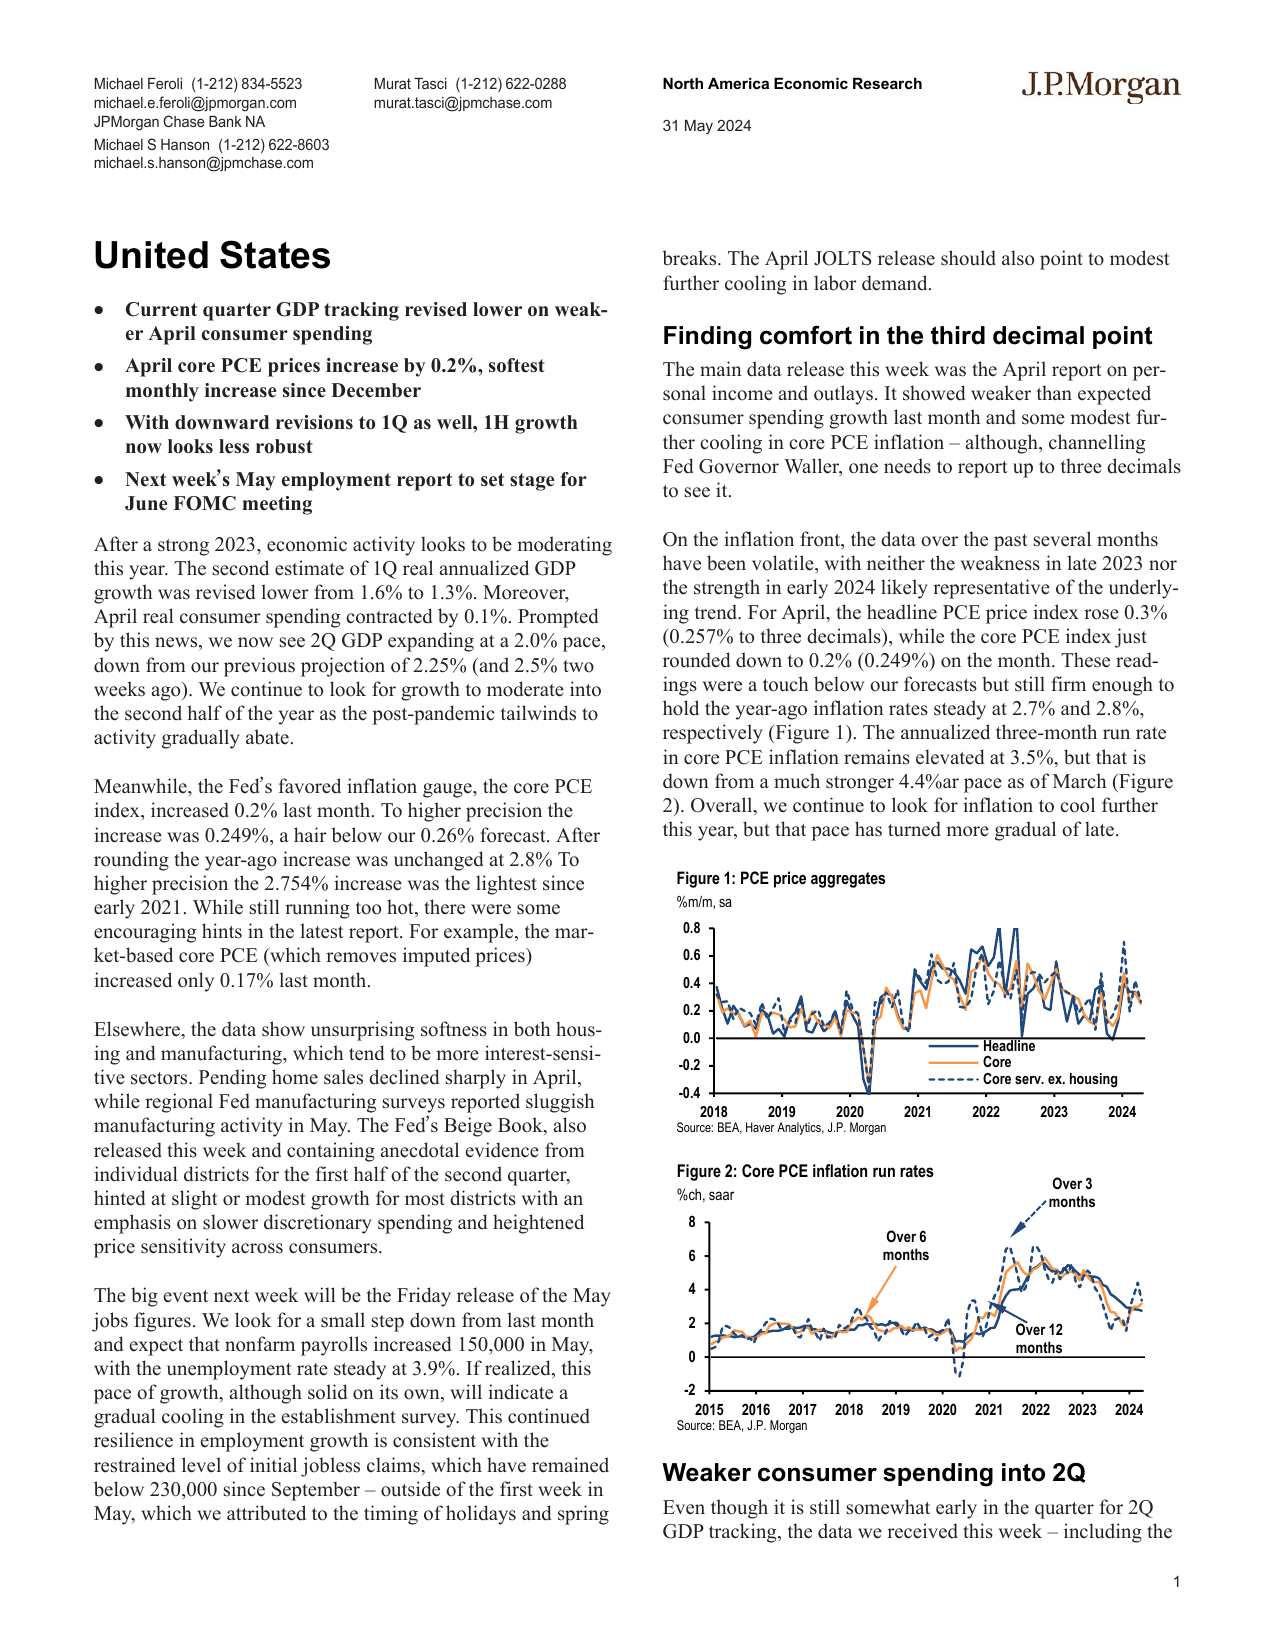 JPMorgan Econ  FI-United States-108470678.pdf